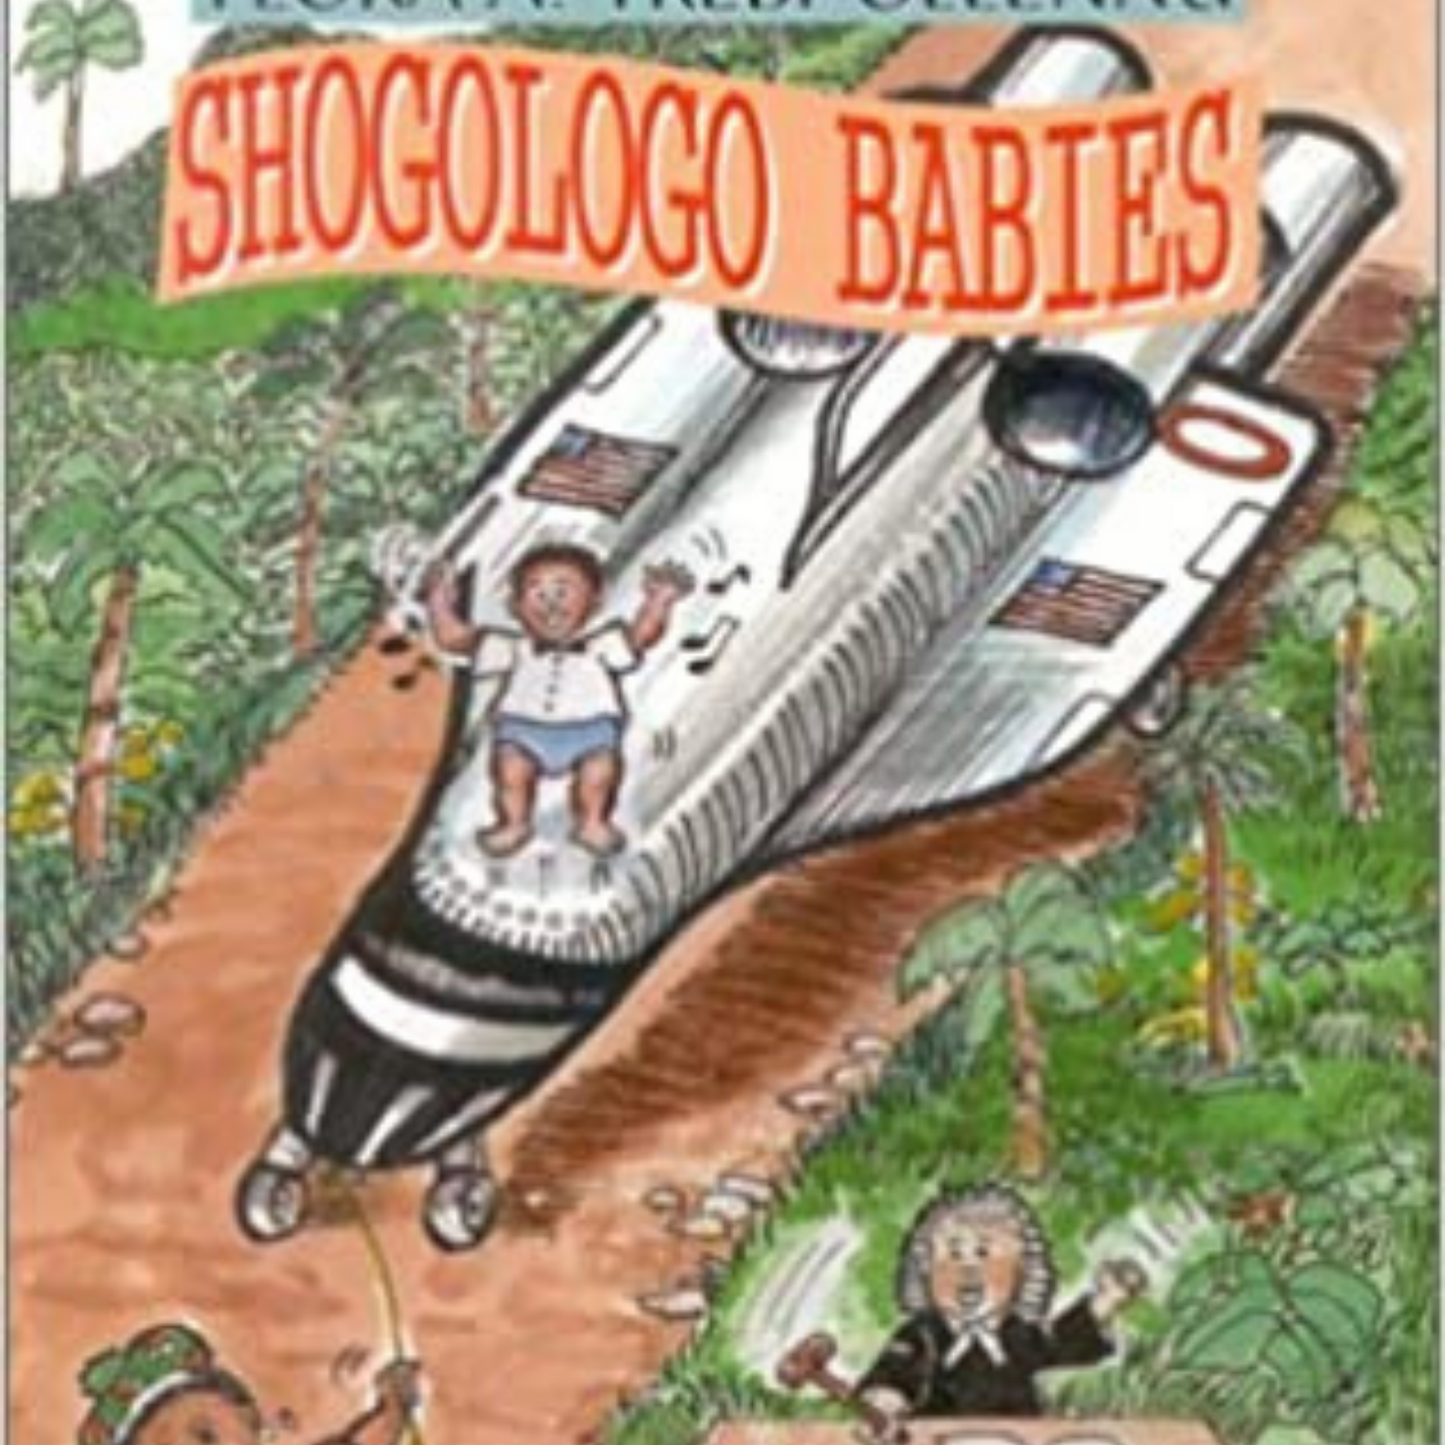 Shogologo Babies